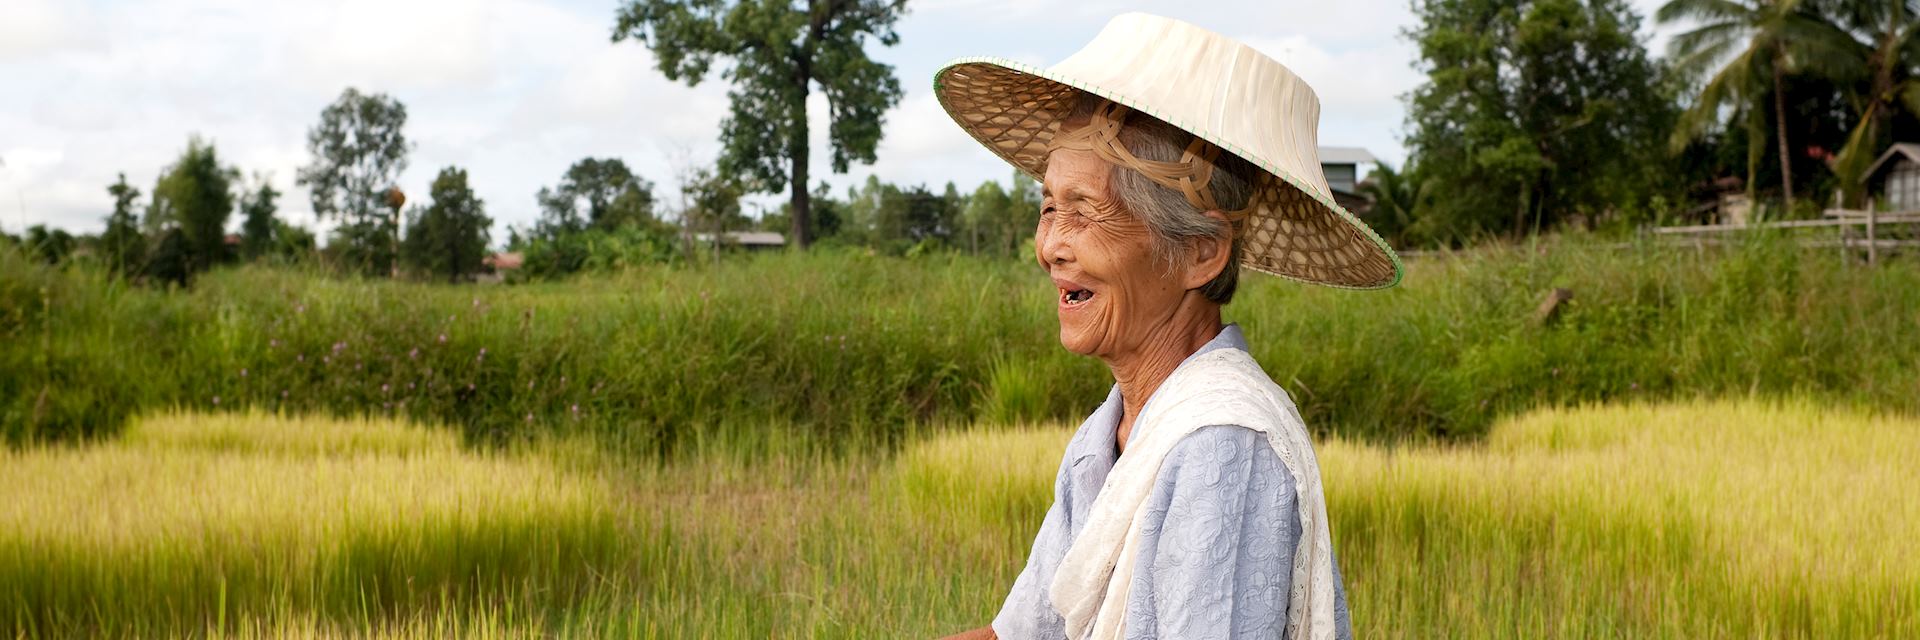 Woman working in a paddy field, Vietnam